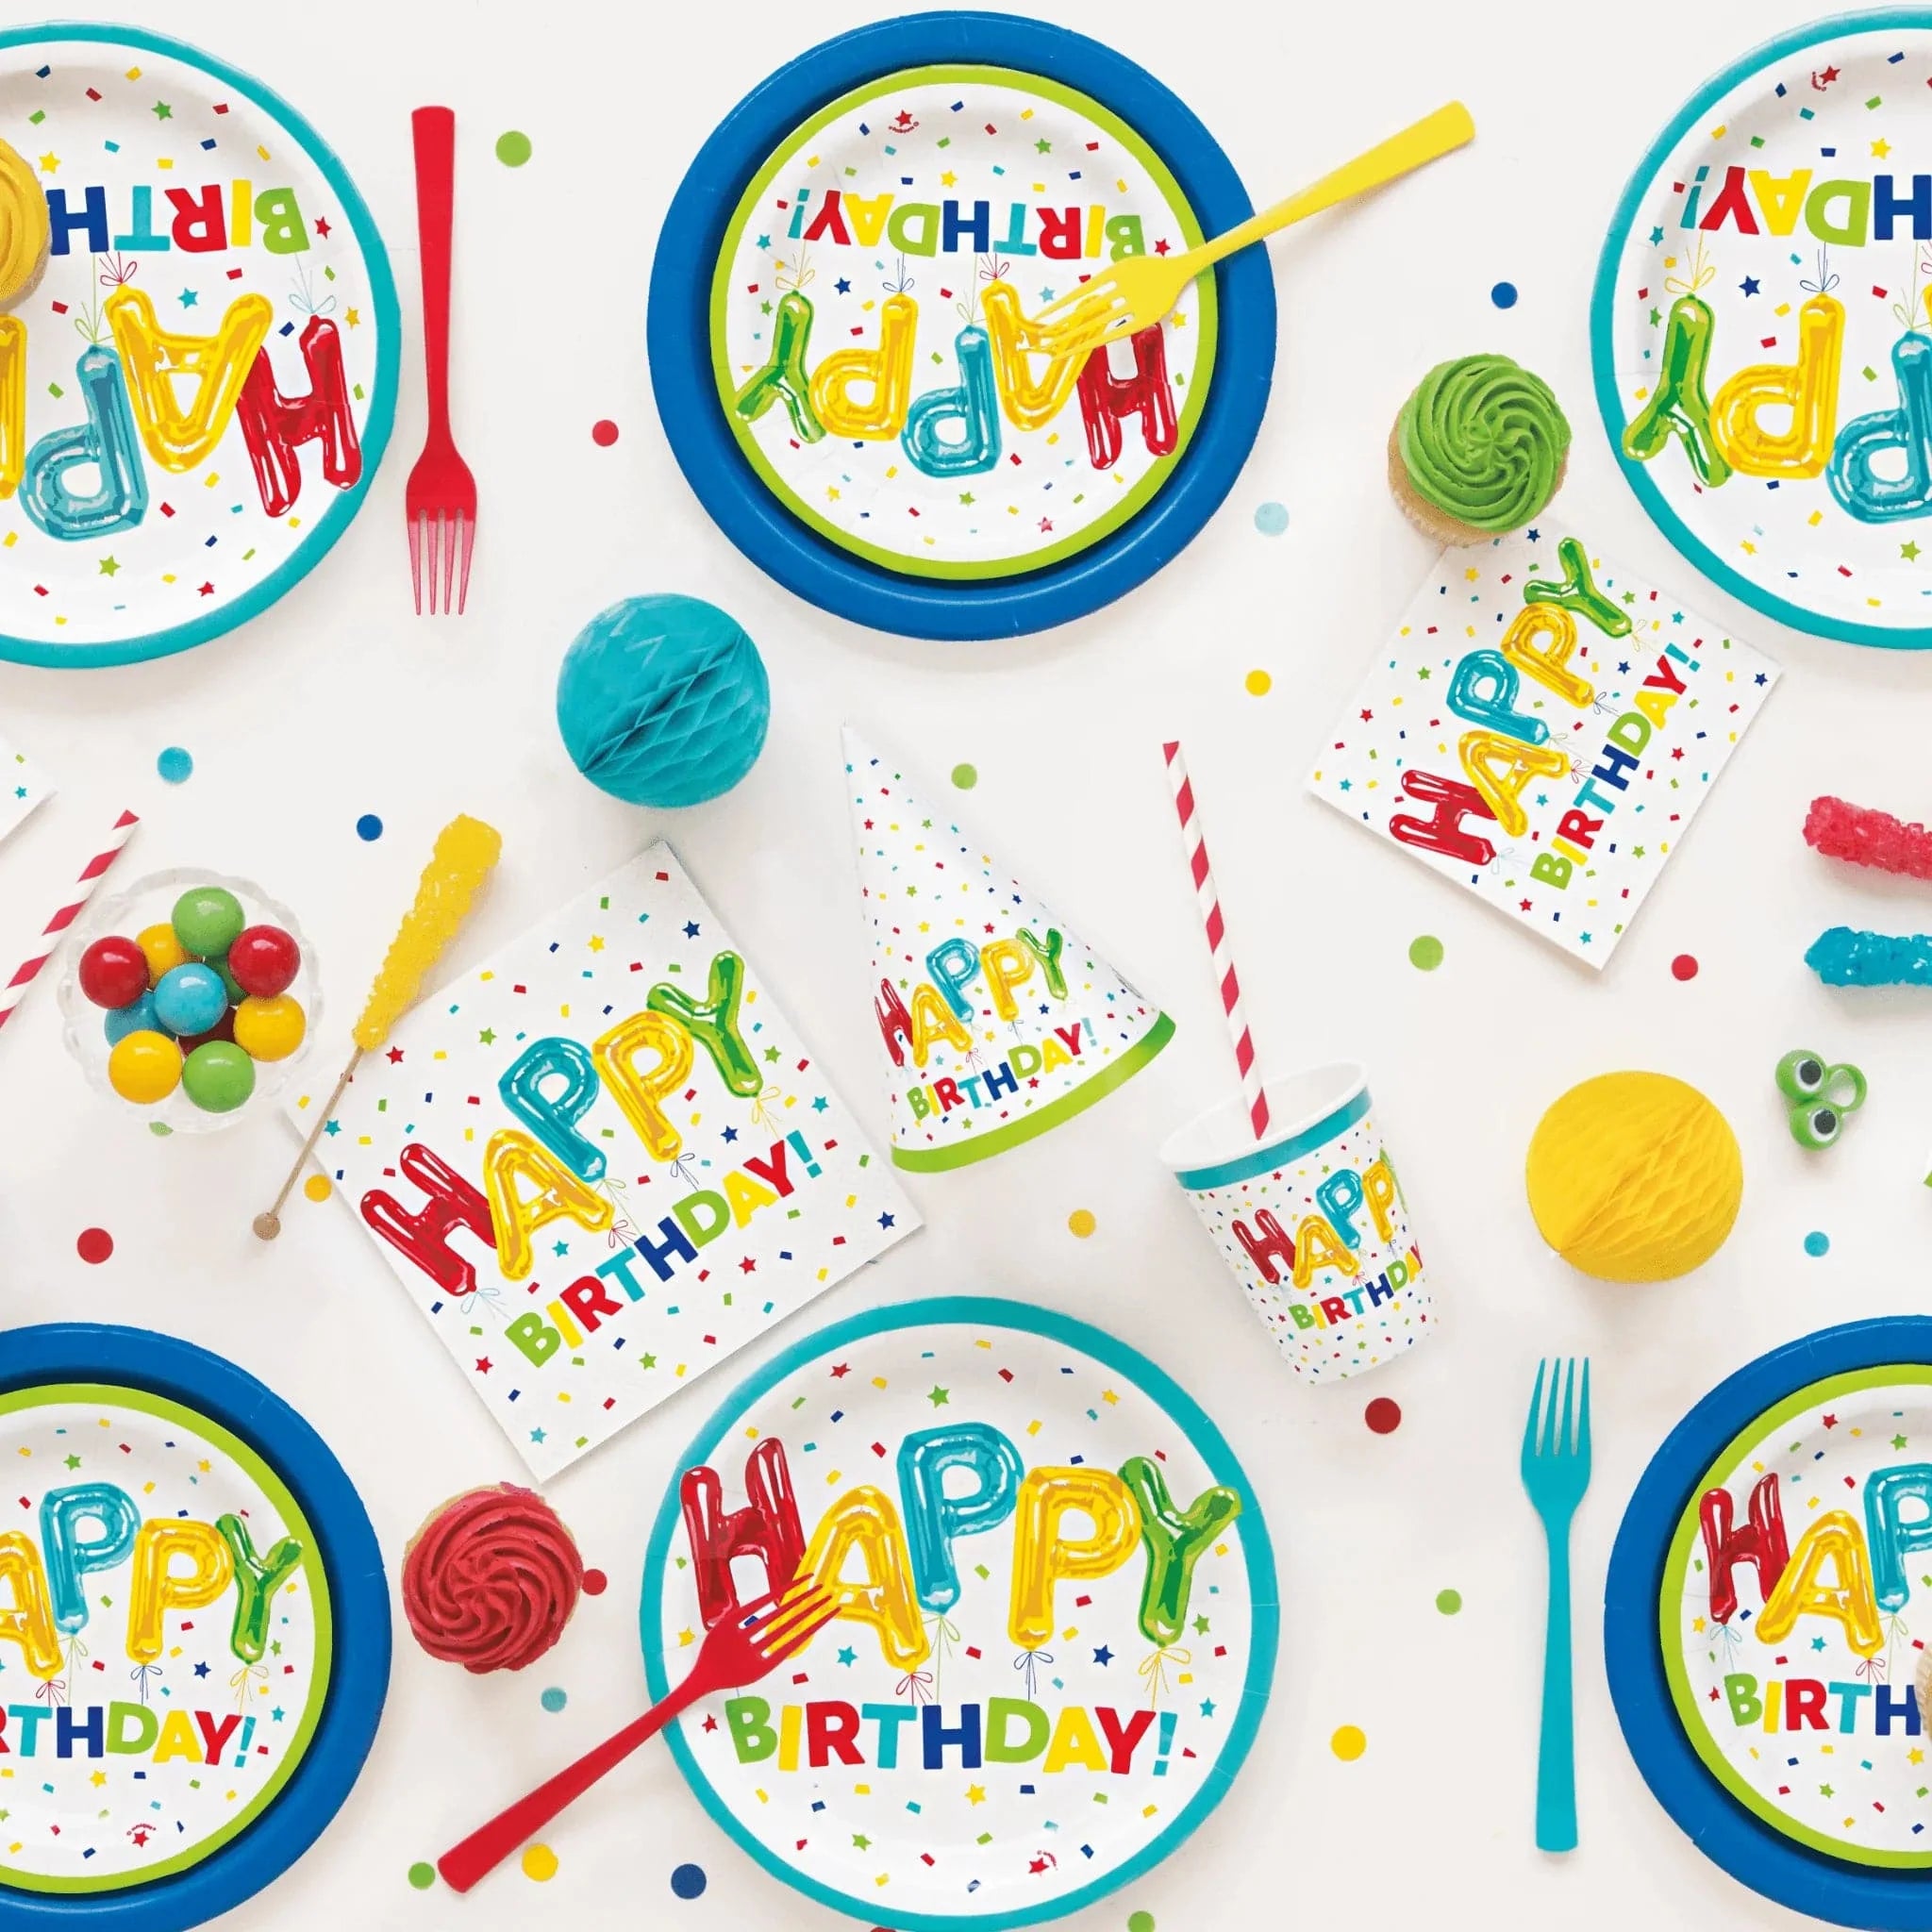 Happy Birthday 18" Foil Balloon - Kids Party Craft